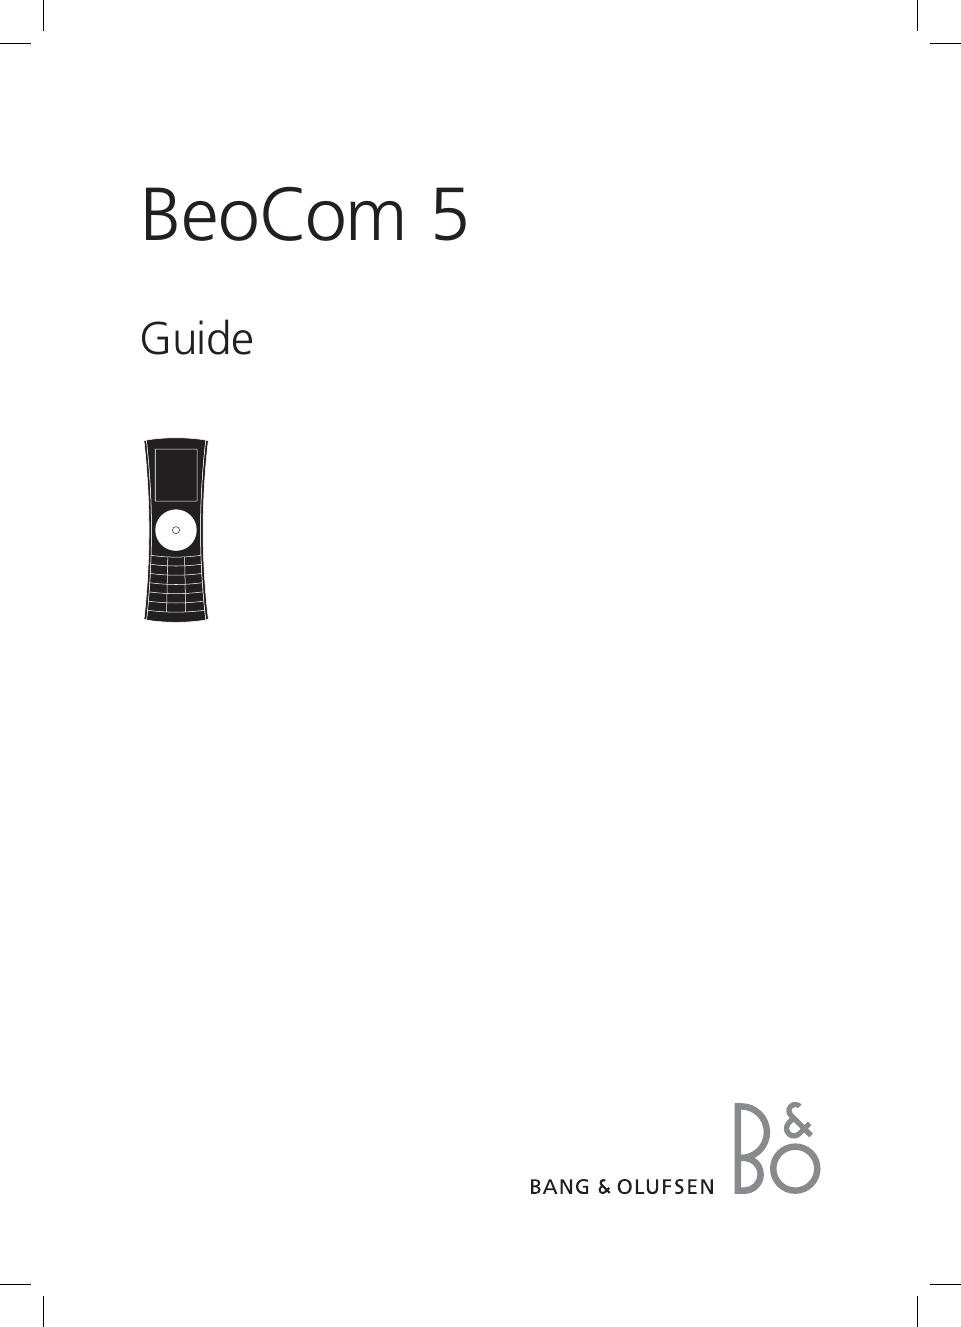 BeoCom 5 Guide 